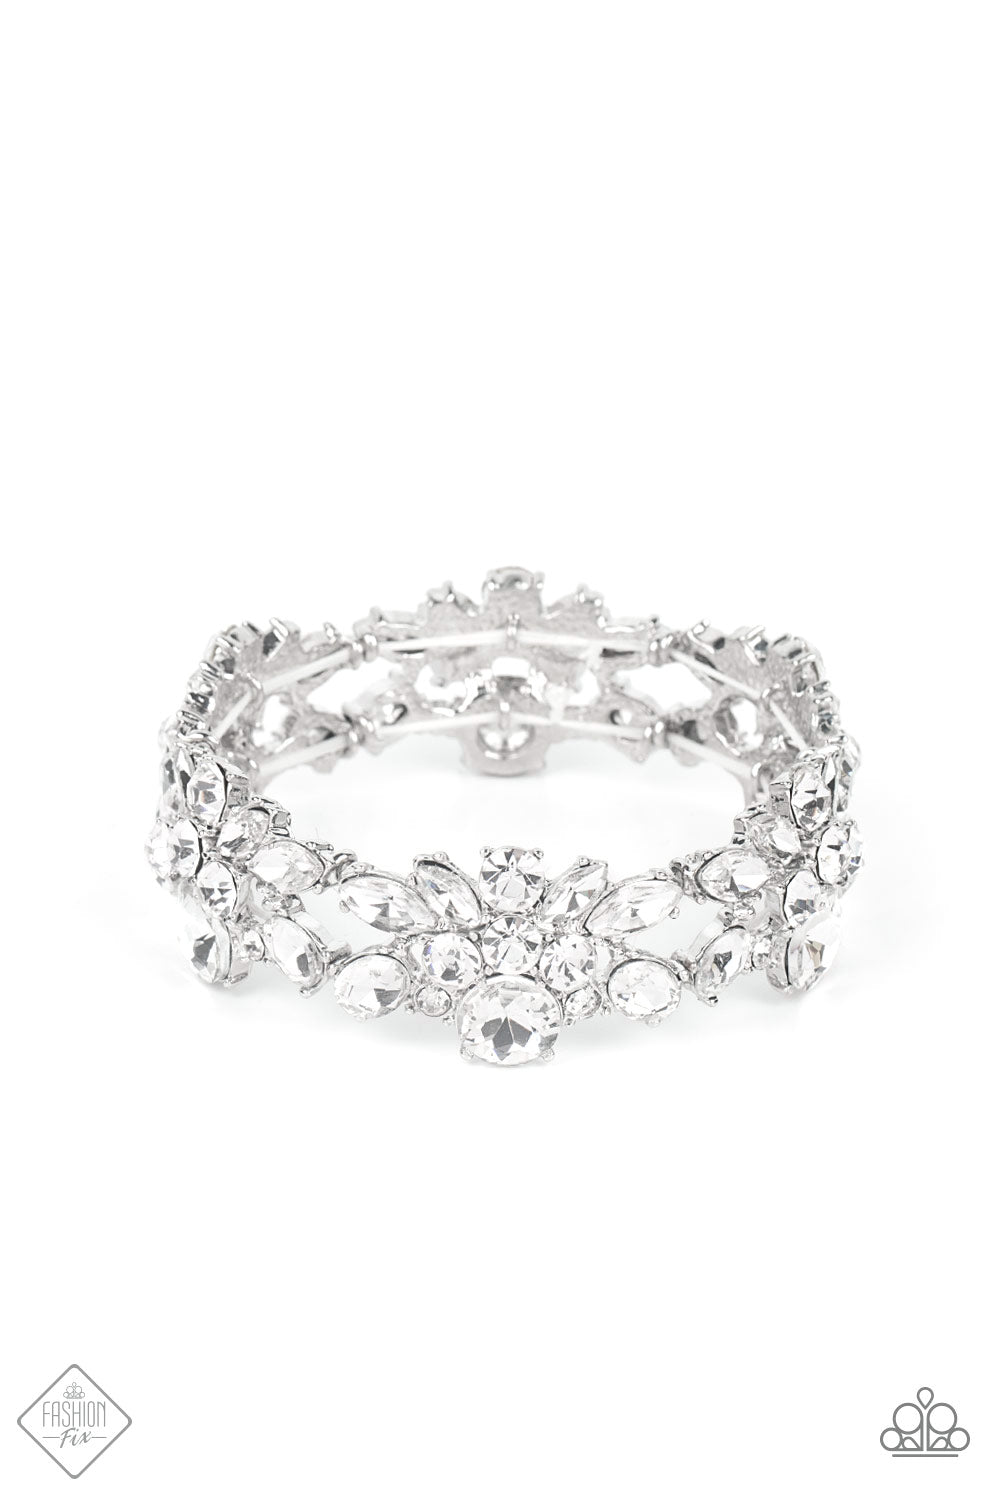 Paparazzi Beloved Bling - White Bracelet - Fashion Fix - A Finishing Touch Jewelry